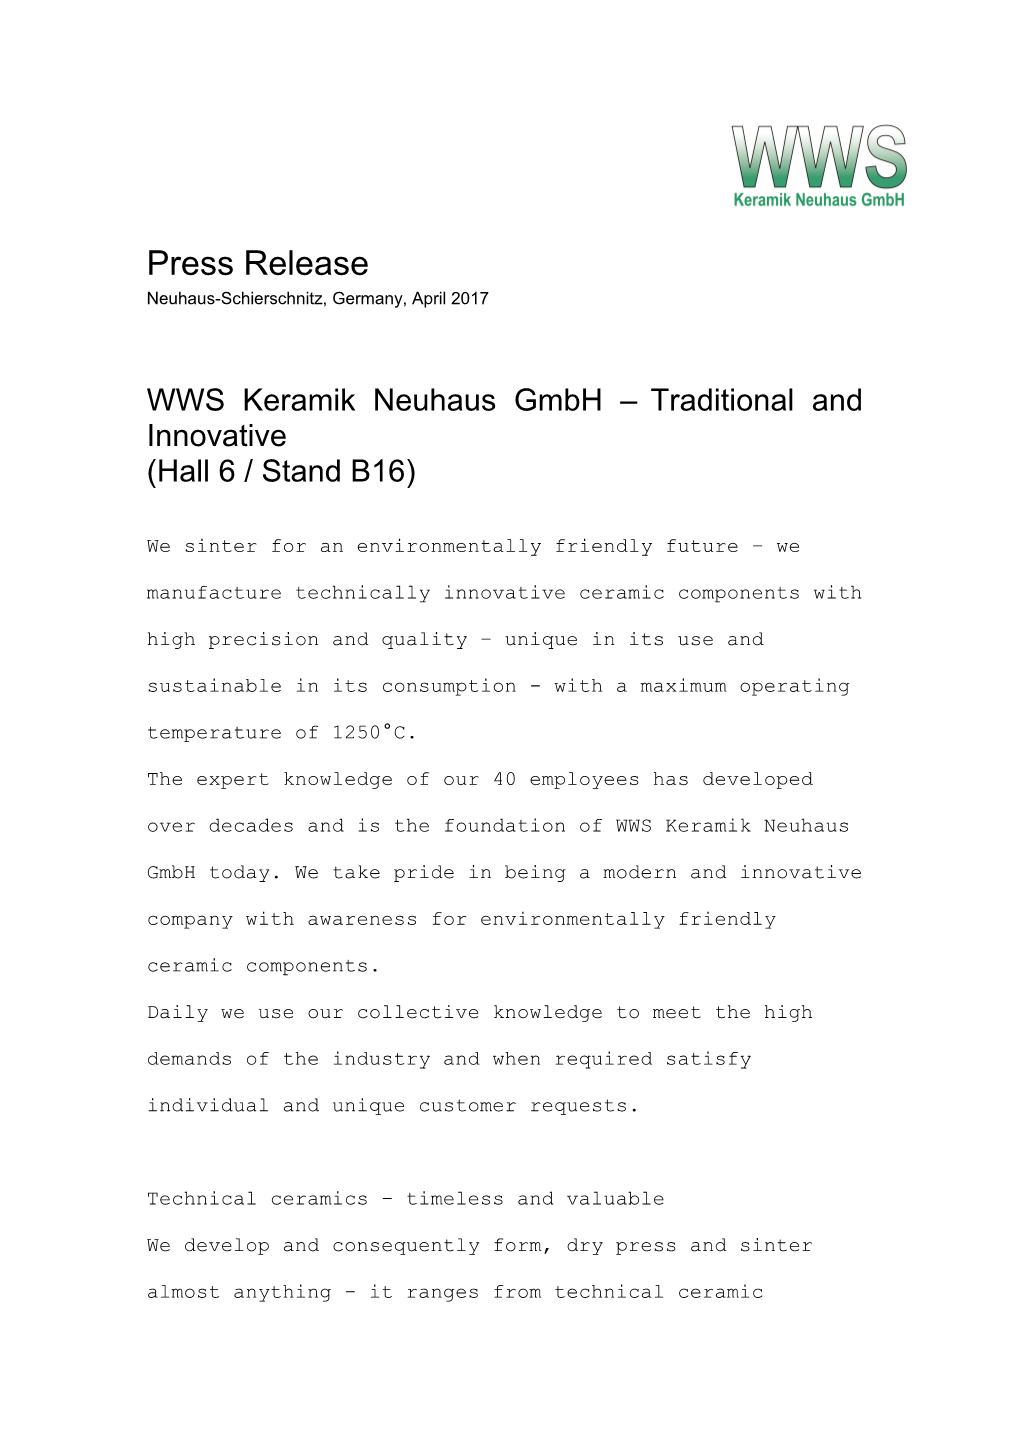 WWS Keramik Neuhaus Gmbh Traditional and Innovative